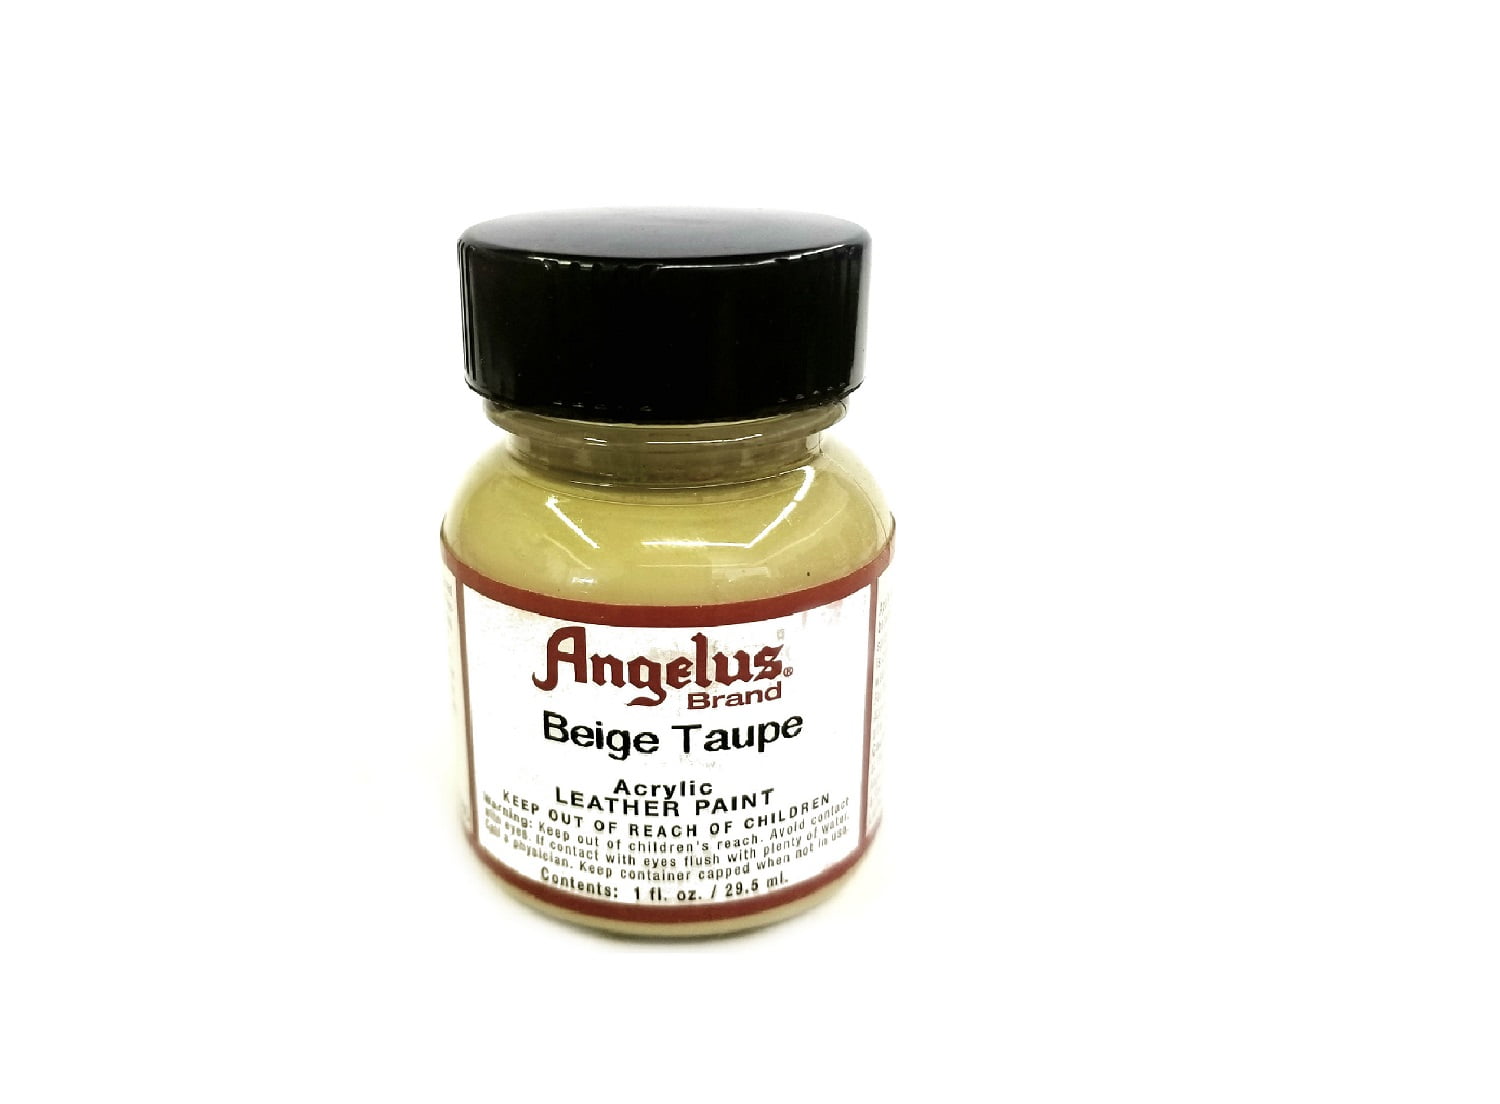 Angelus Acrylic Leather Paint, 1 oz, Vachetta